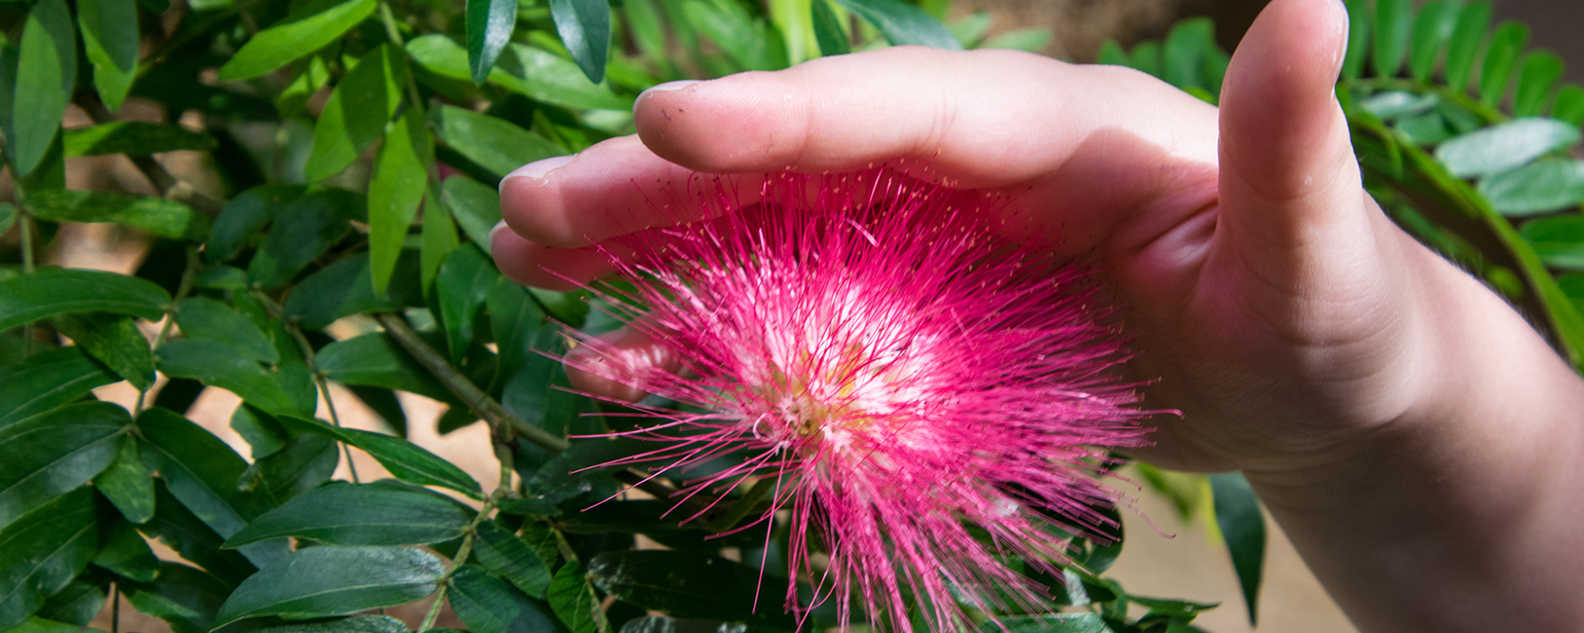 sensory pink flower close up 